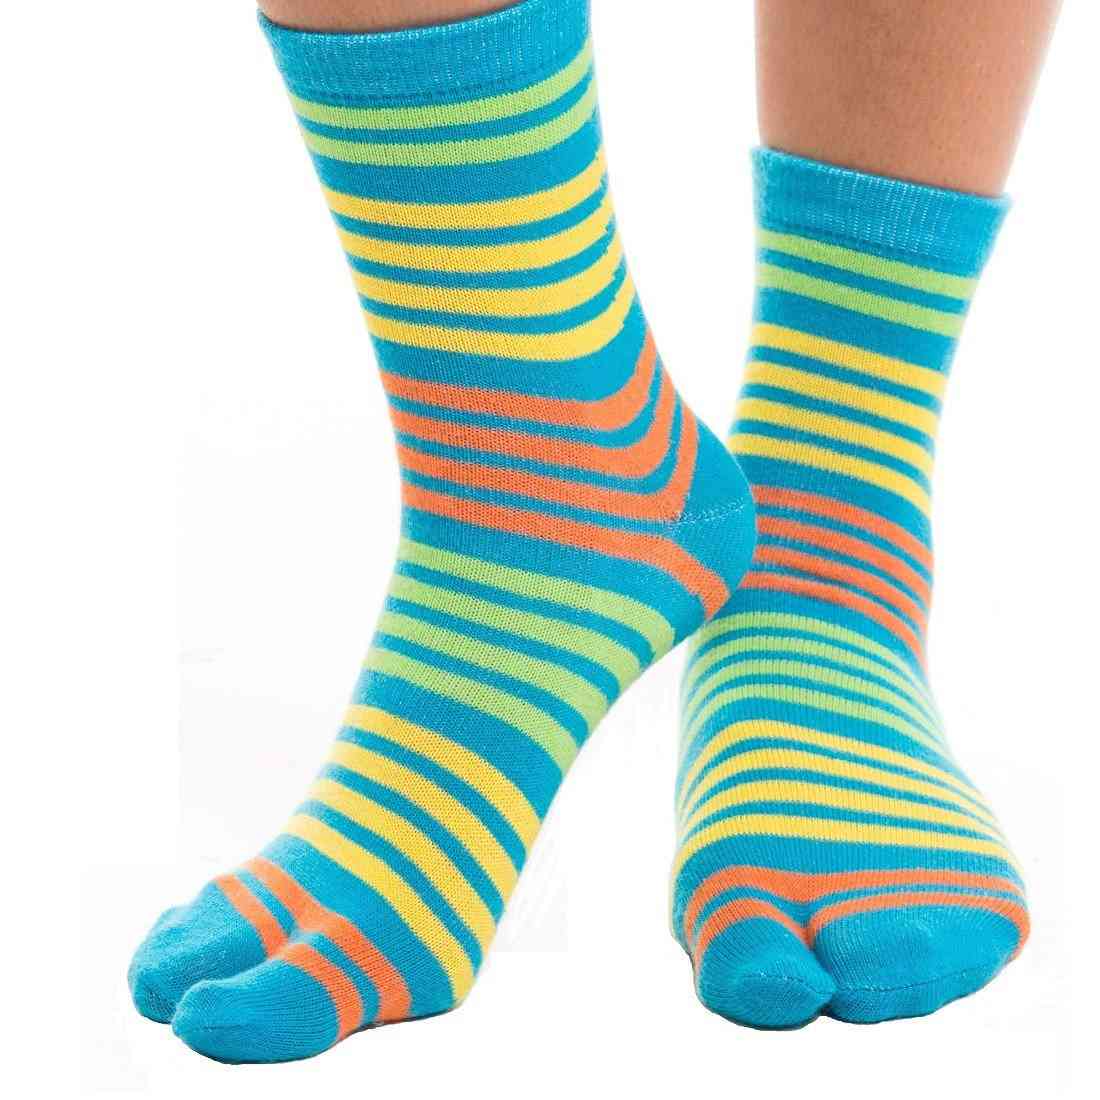 Plave, žute prugaste japanke tabi čarape